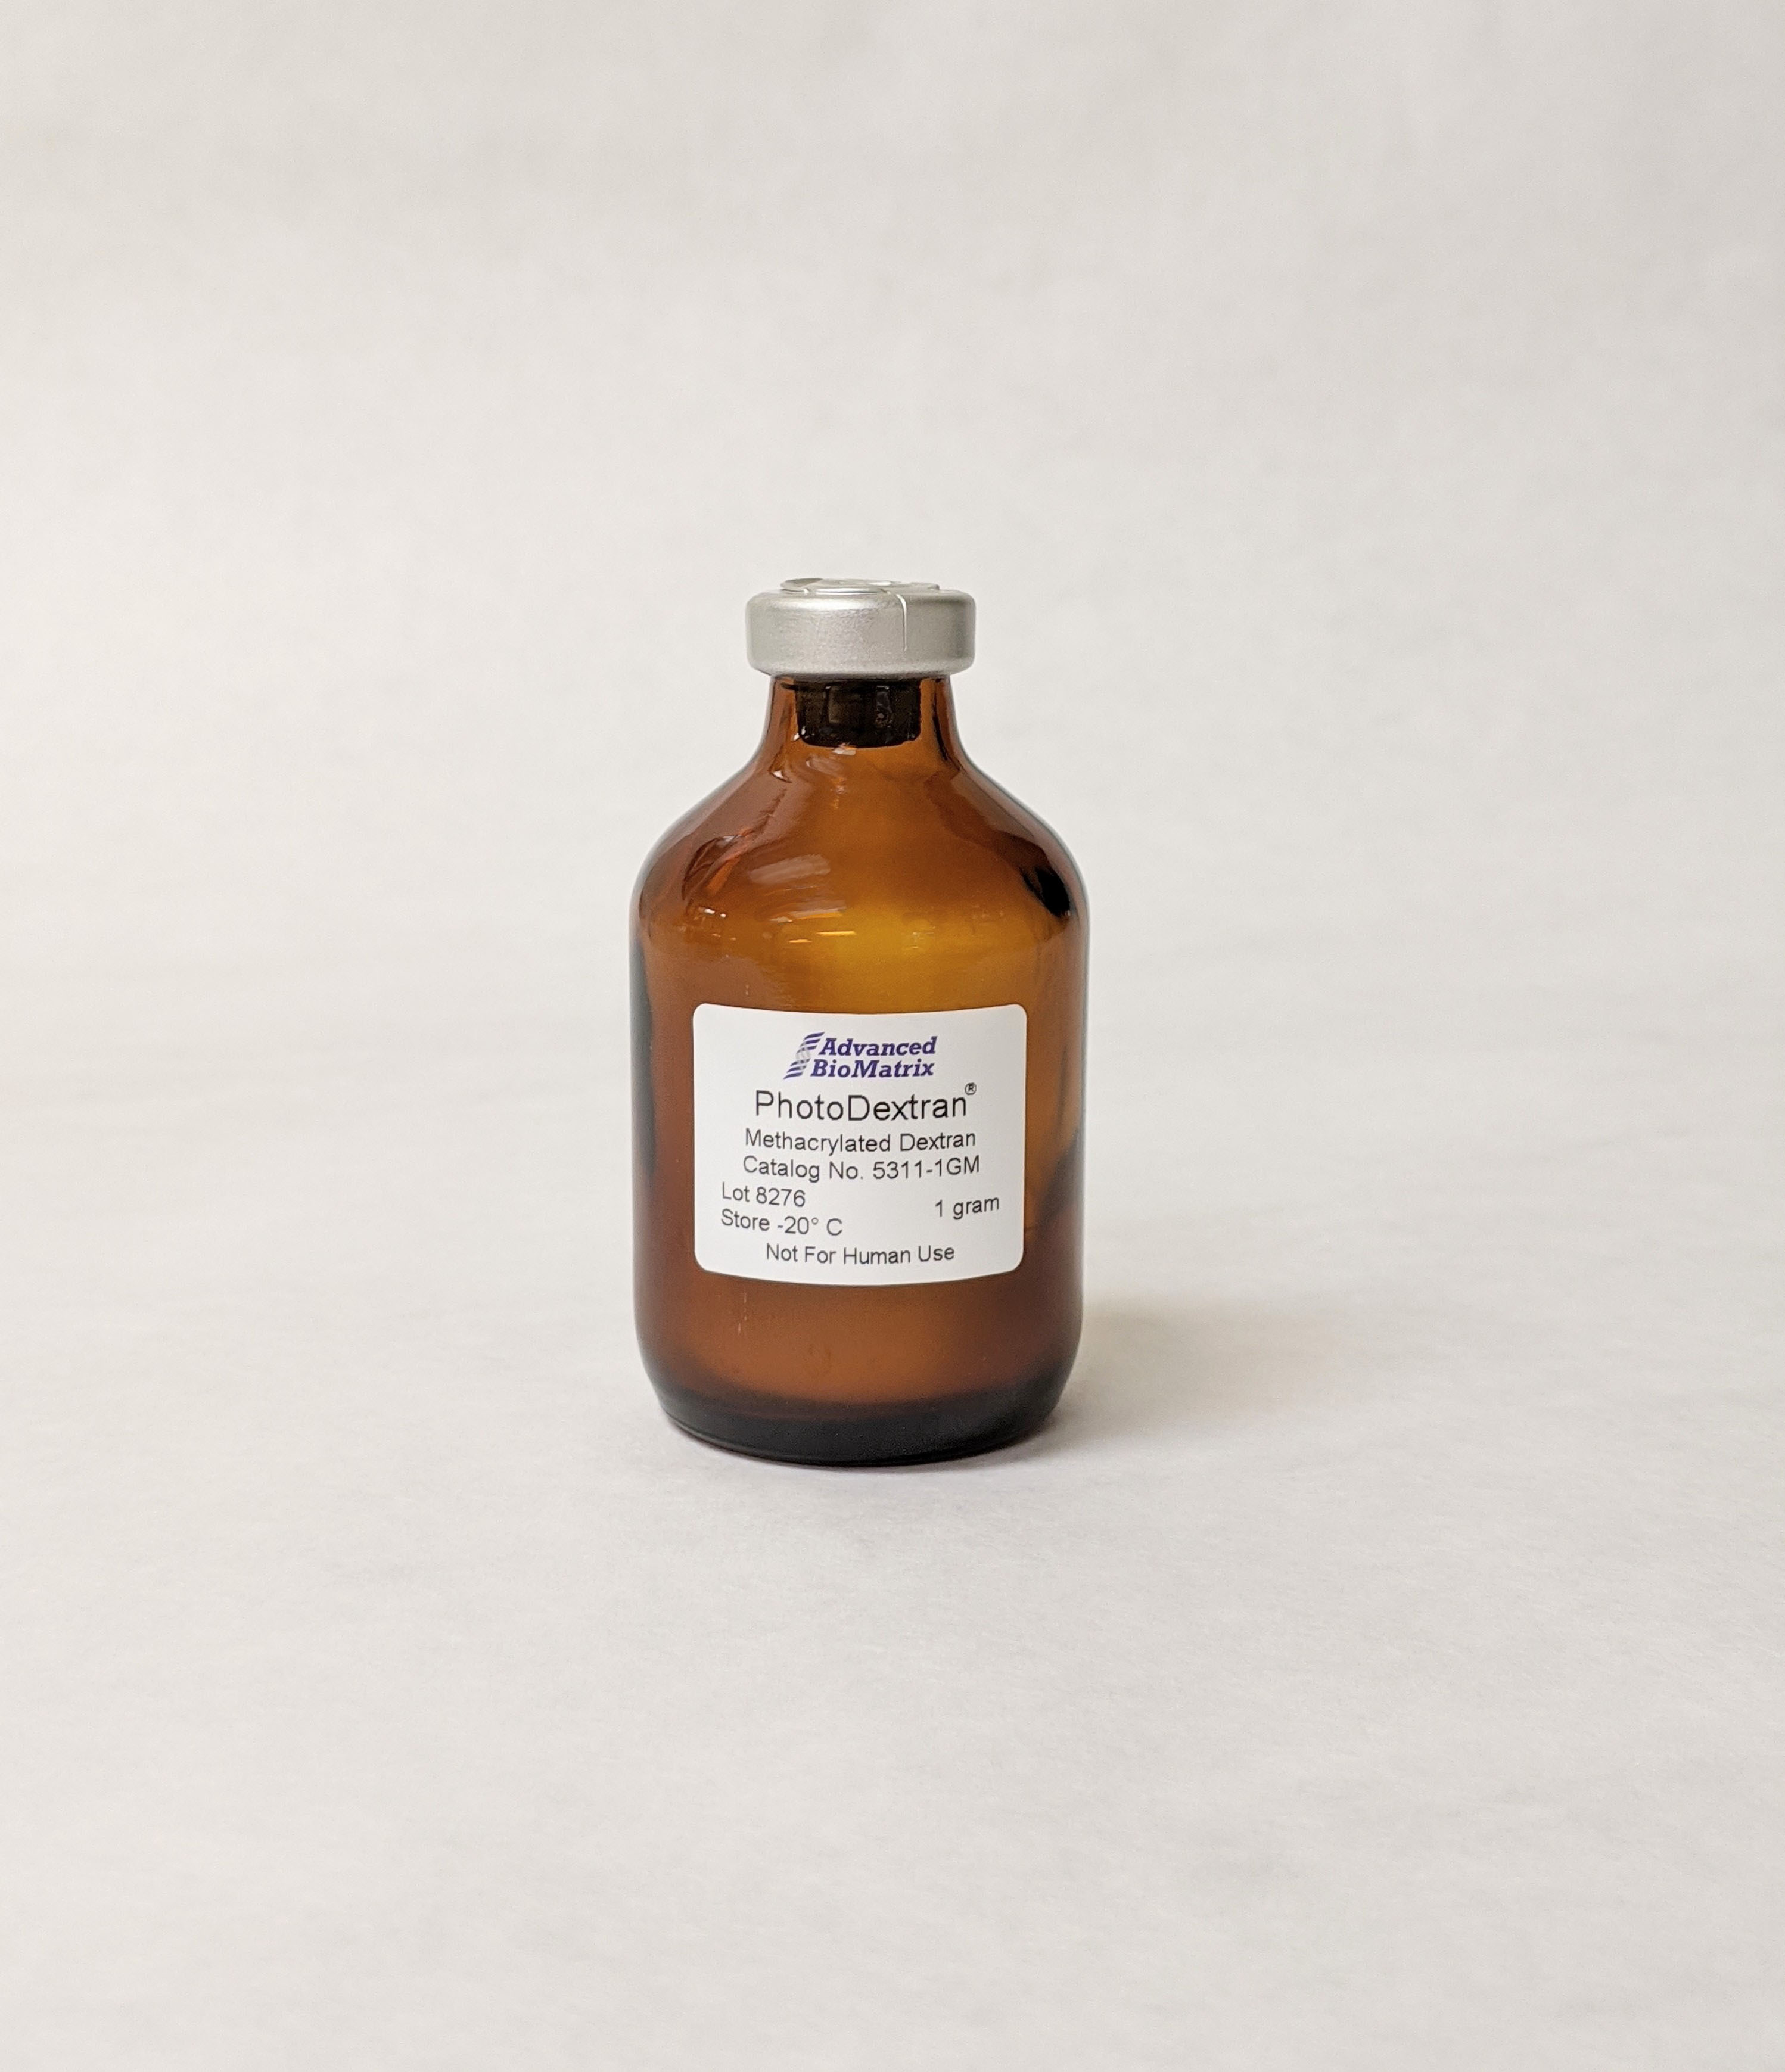 PhotoDextran Methacrylated Dextran 1gram